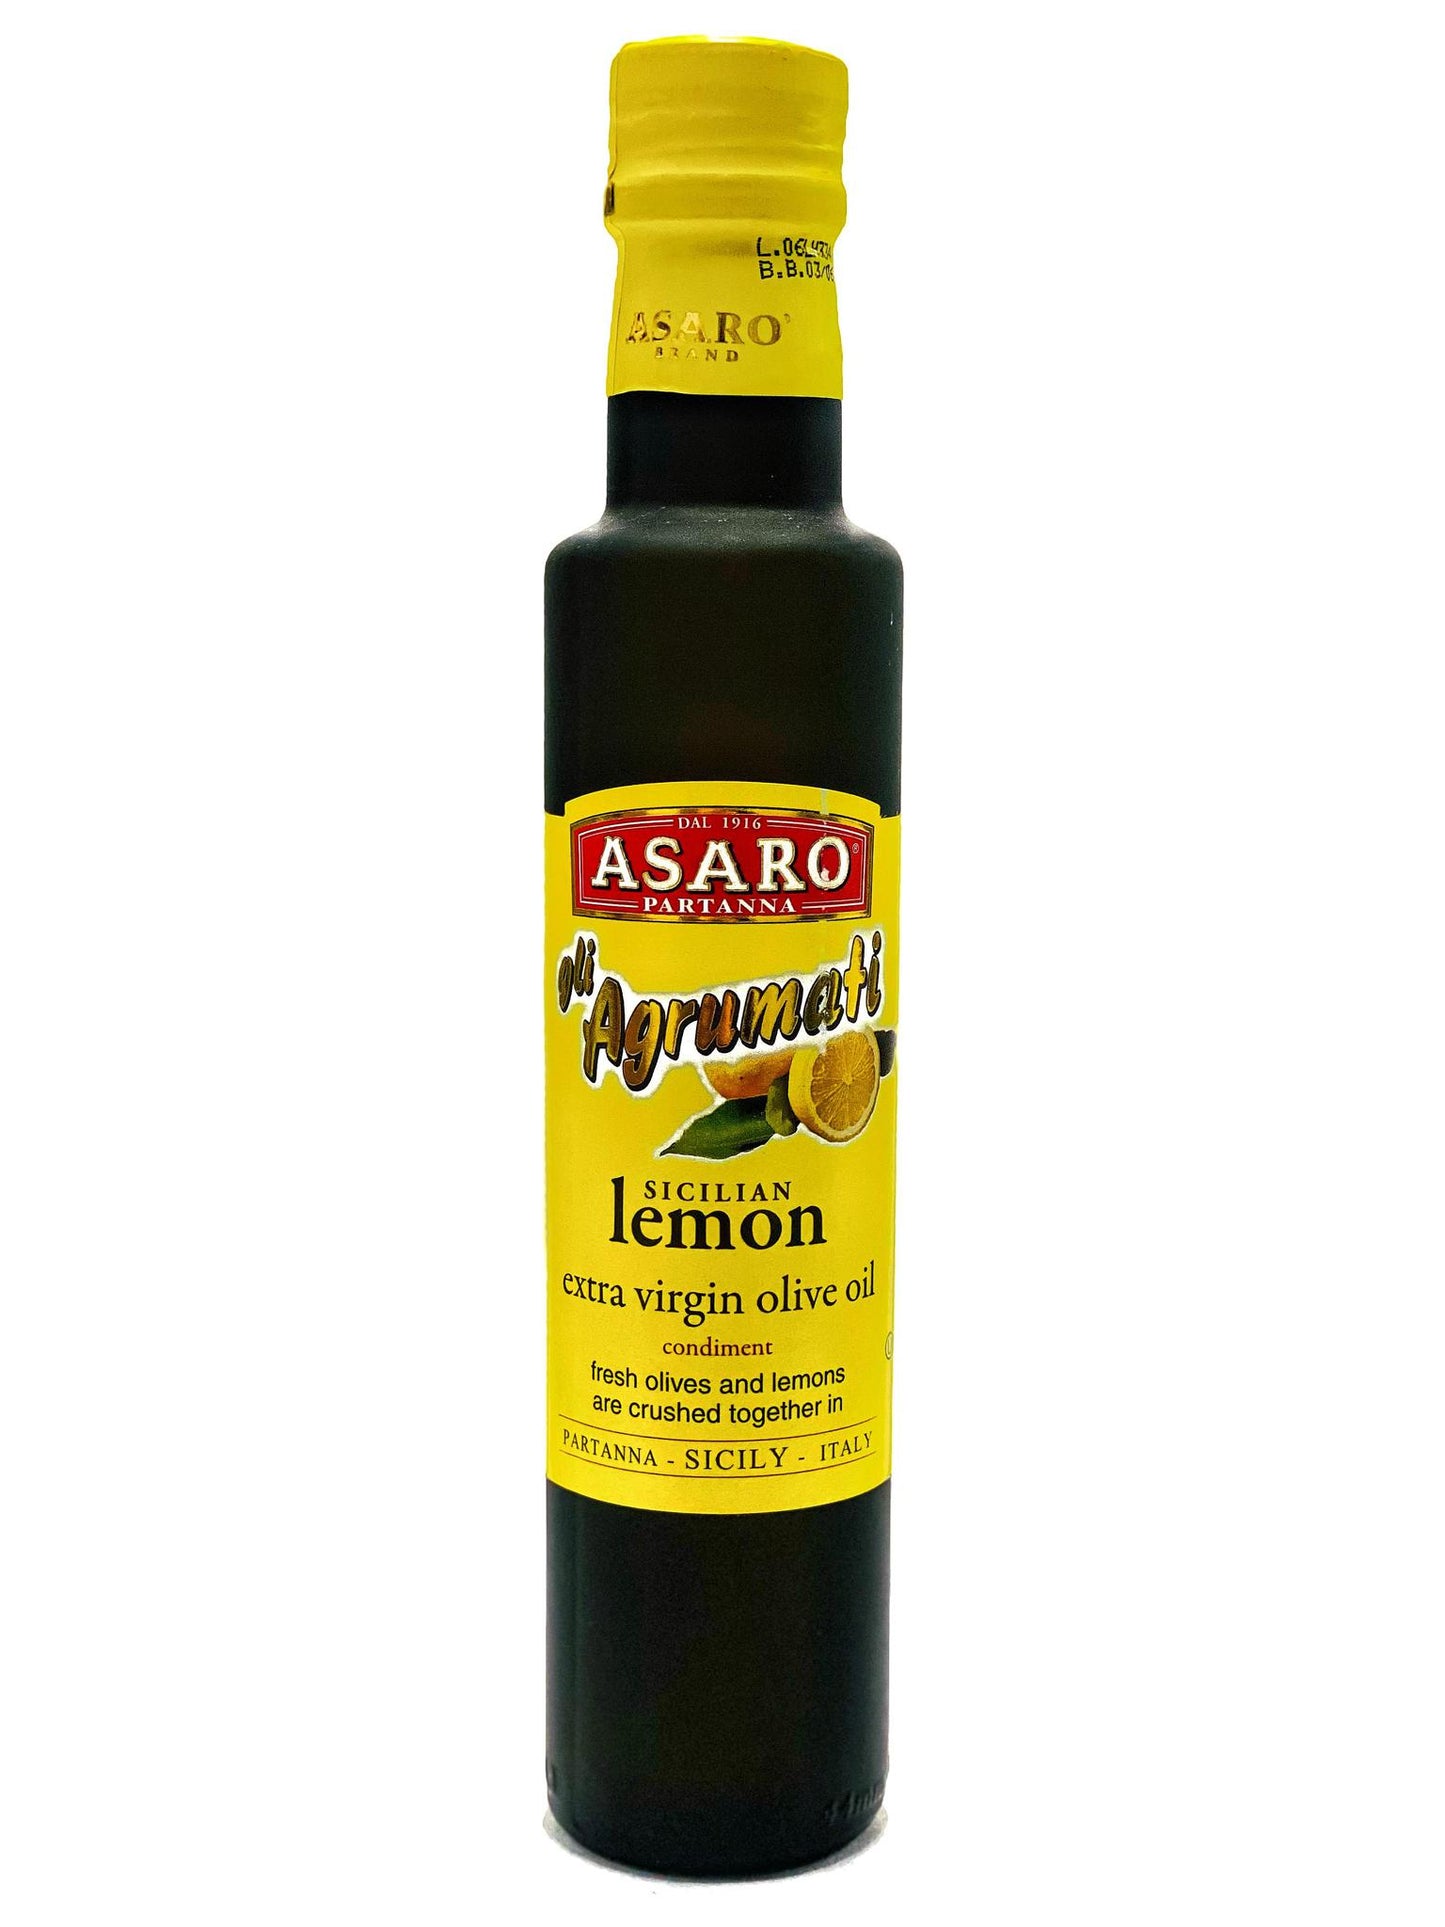 Asaro Sicilian Lemon Extra Virgin Olive Oil, 8.5 fl oz